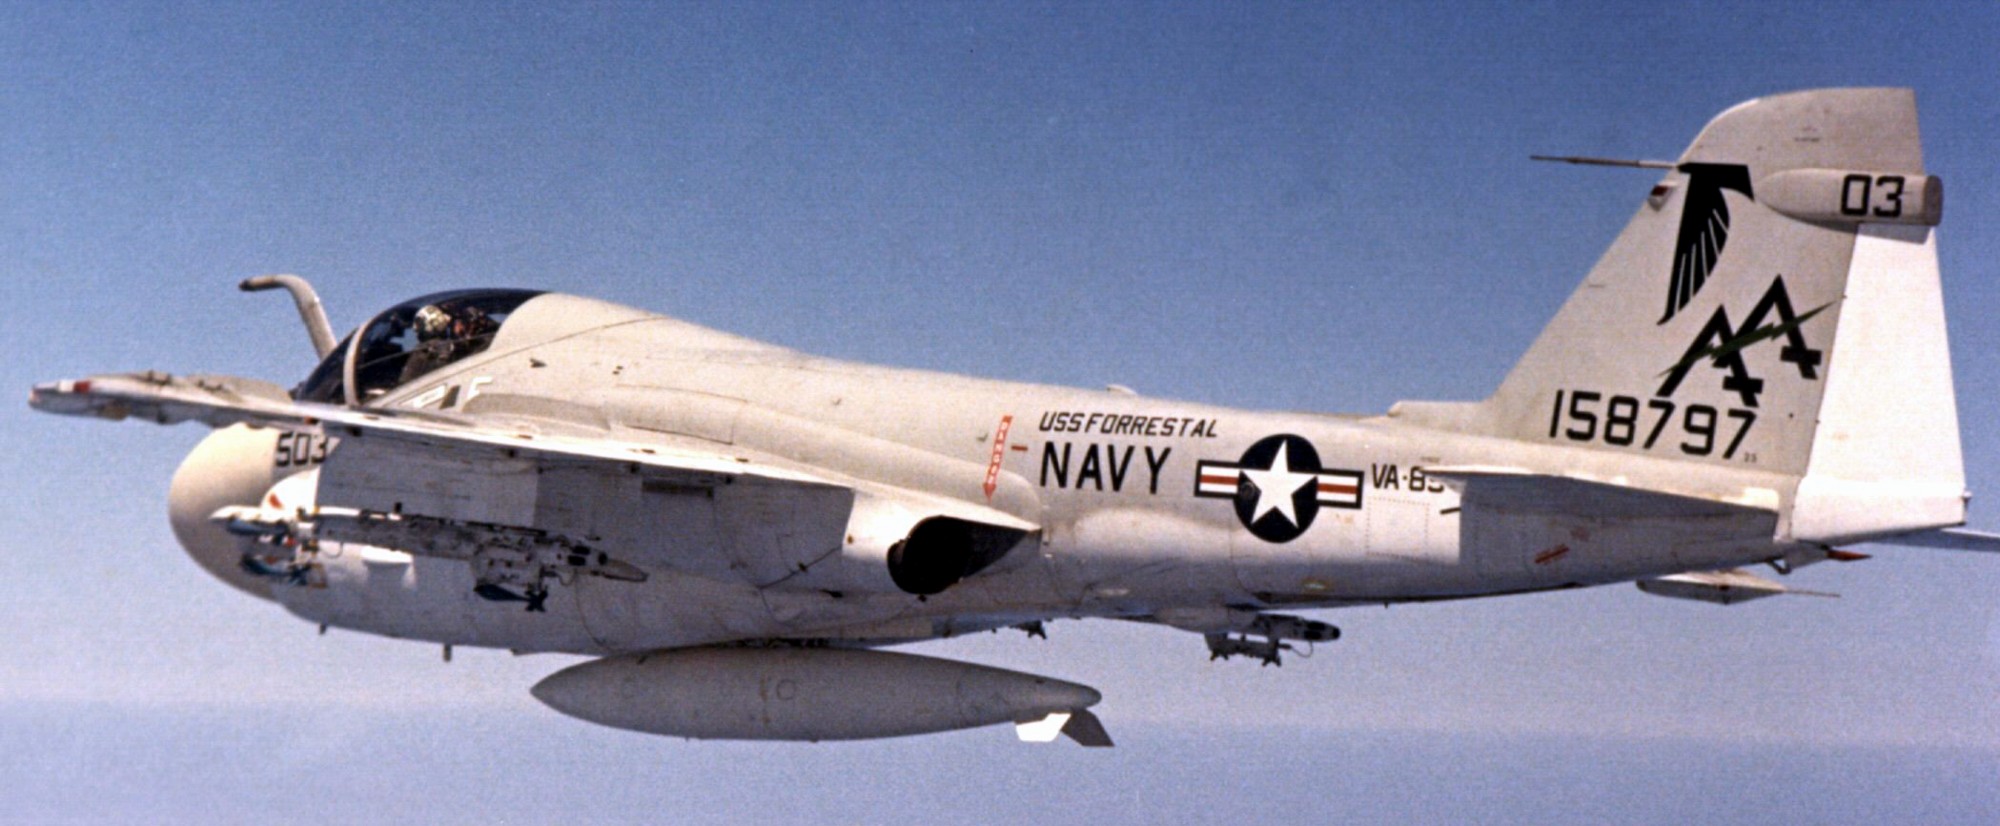 va-85 black falcons attack squadron us navy a-6e intruder carrier air wing cvw-17 uss forrestal cv-59 32